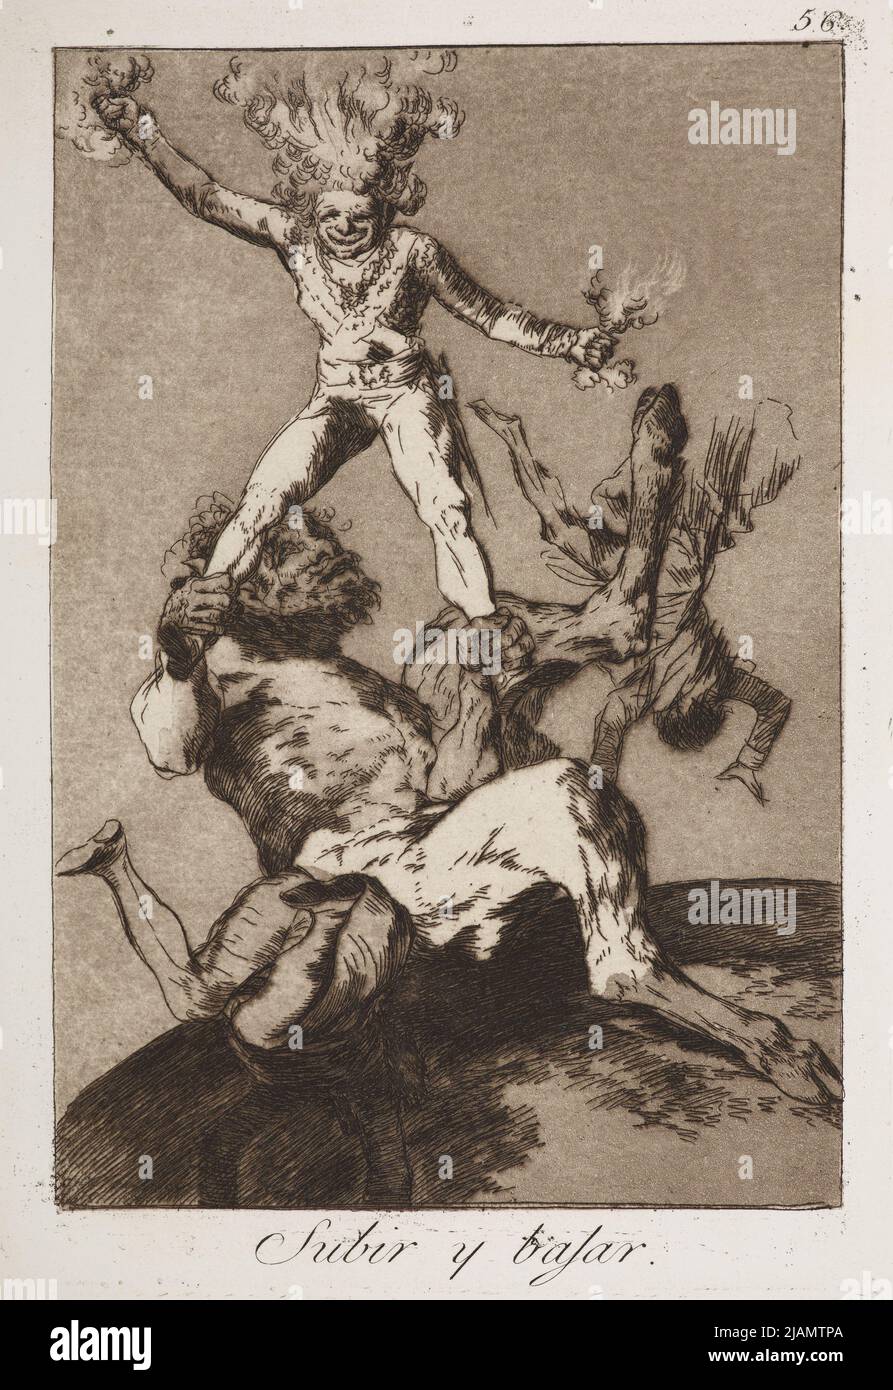 Subir y bajar /To rise and to fall; board No. 56 from: “Los Caprichos”  Caprices, ed. II, Madrid ca. 1855 Goya, Francisco de (1746 1828) Stock Photo